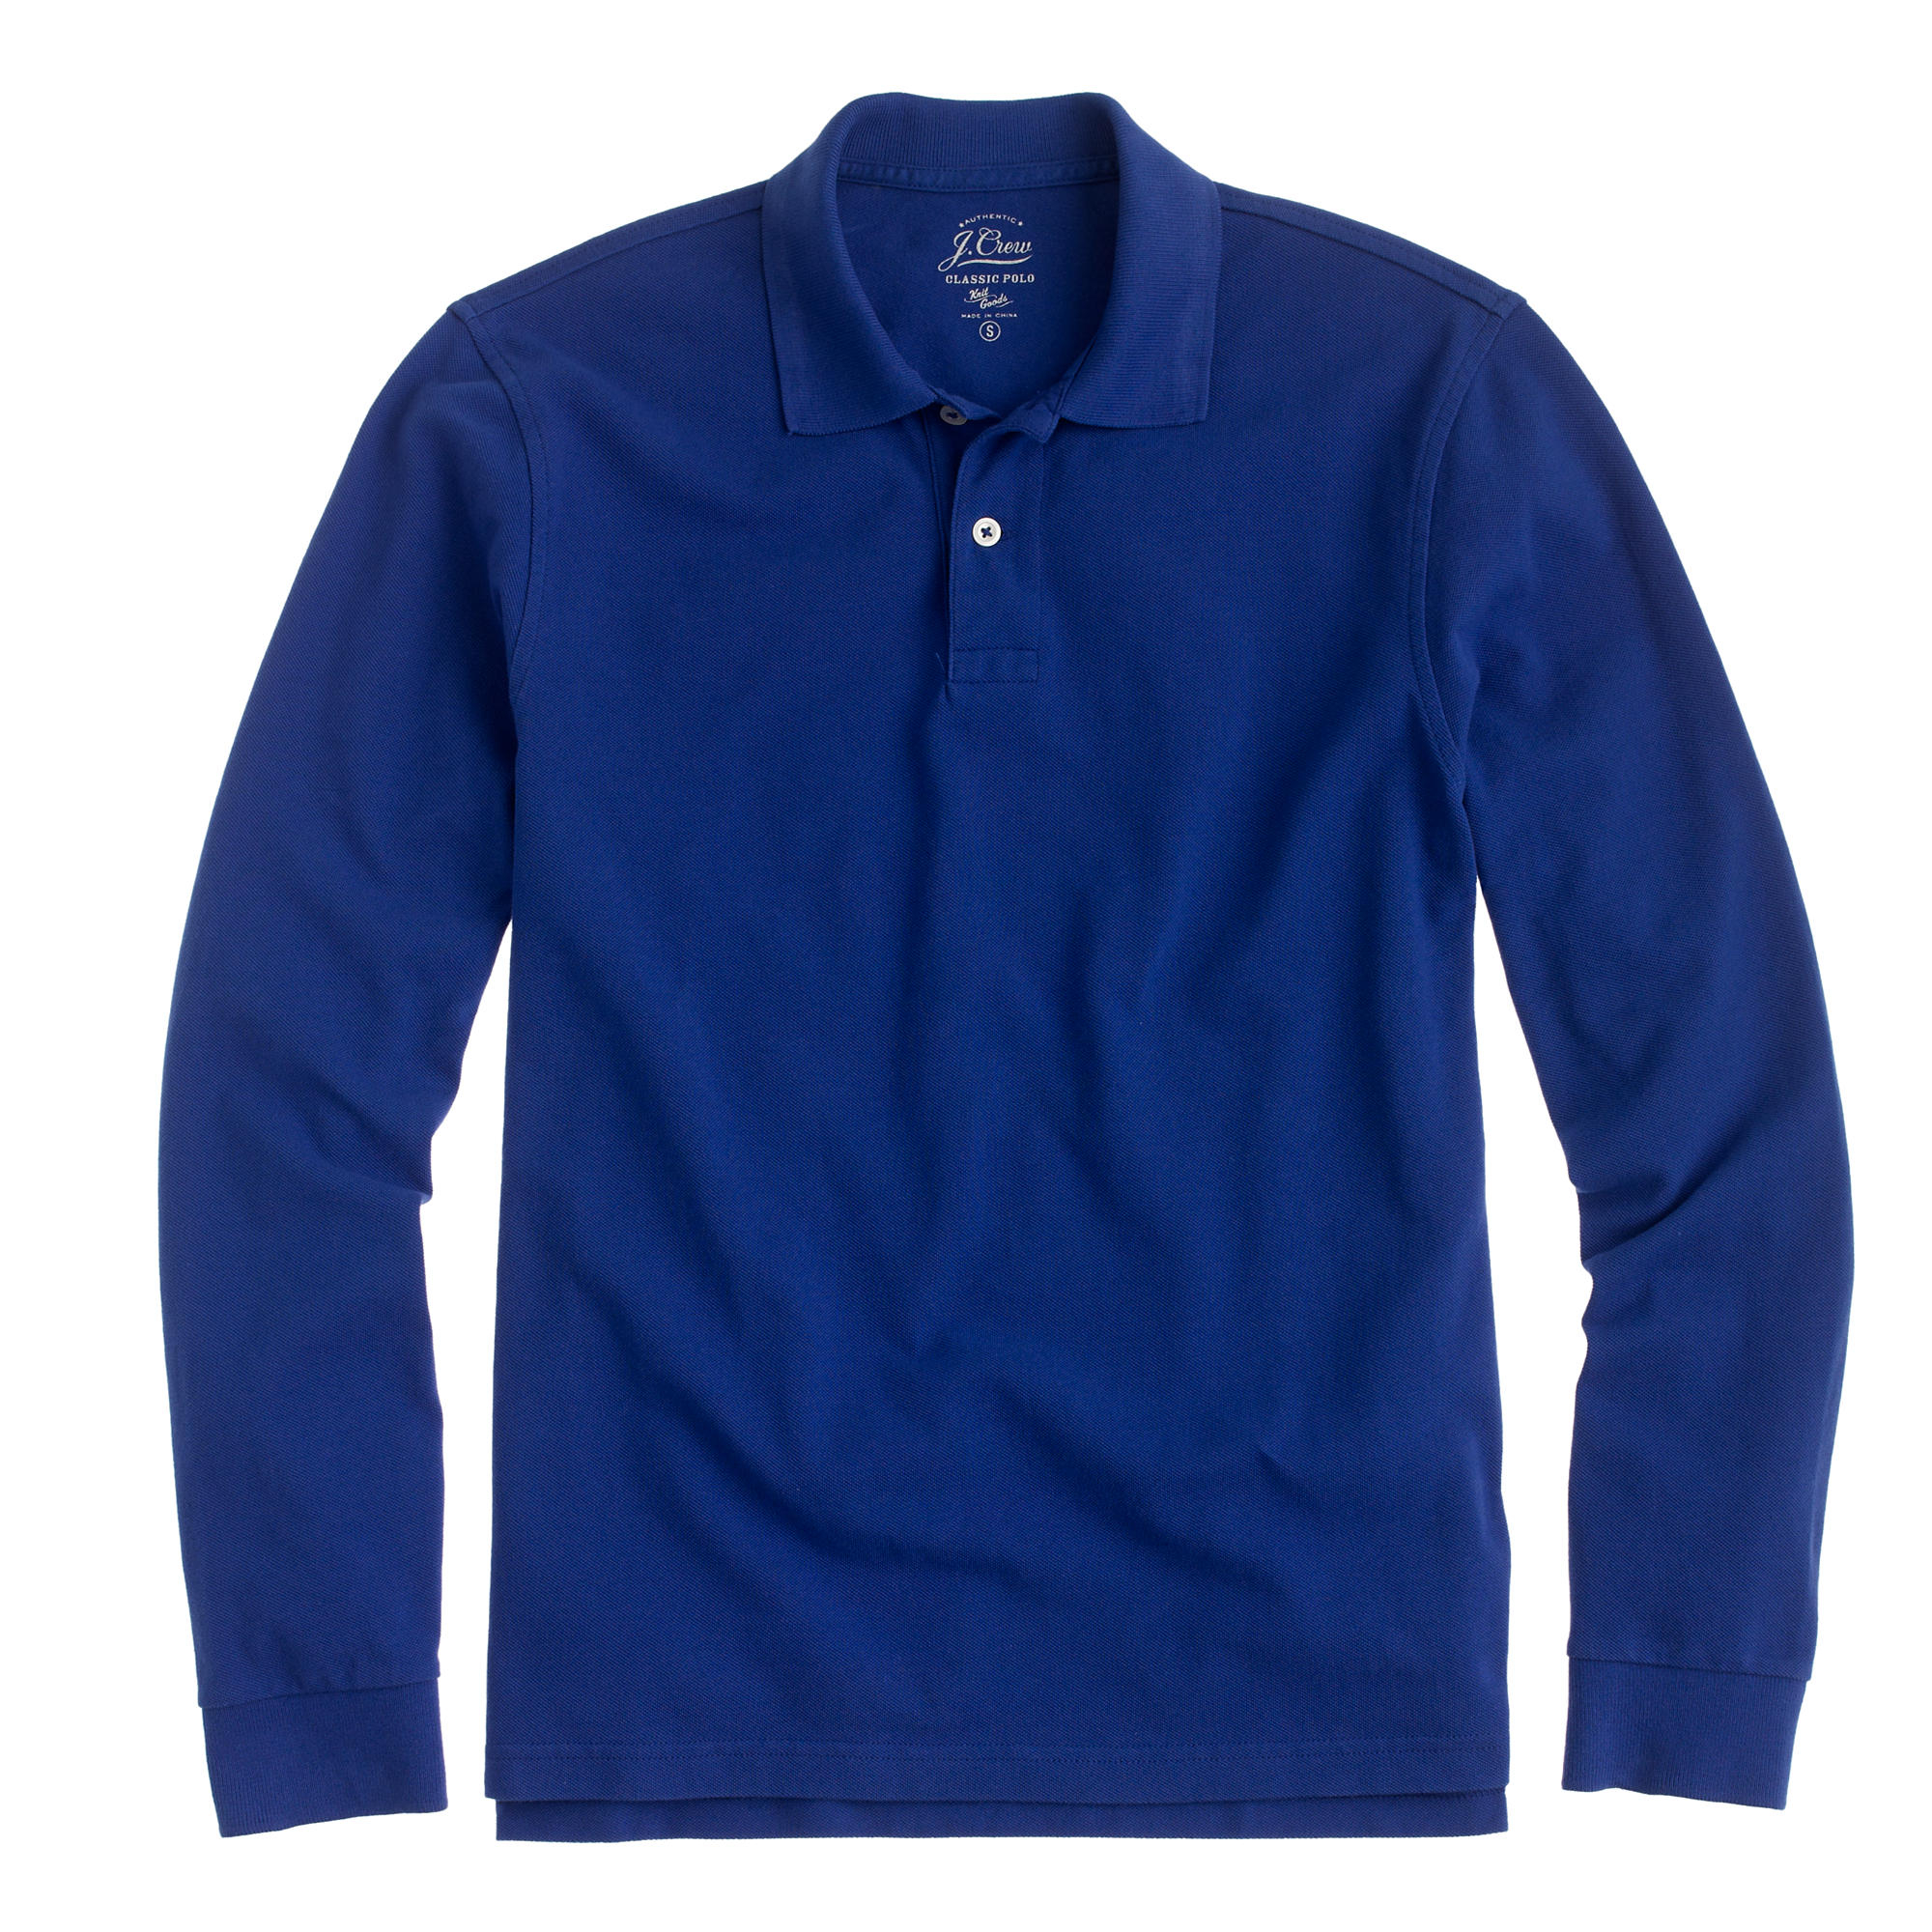 J.Crew Tall Long-Sleeve Classic Piqué Polo Shirt in Blue for Men - Lyst